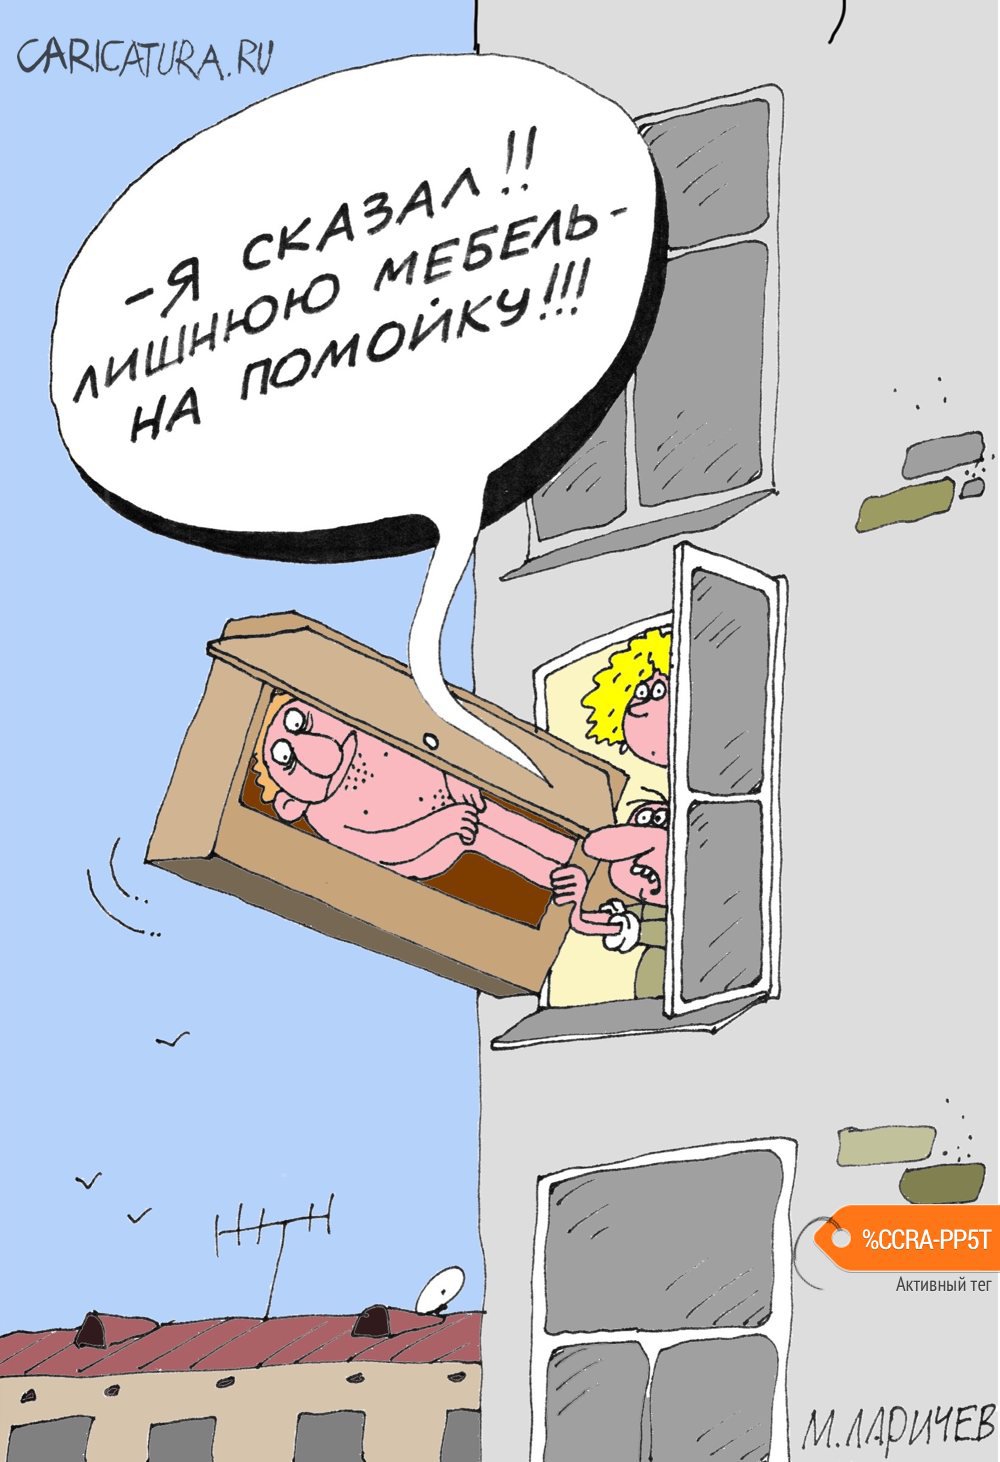 Карикатура "Помойка", Михаил Ларичев